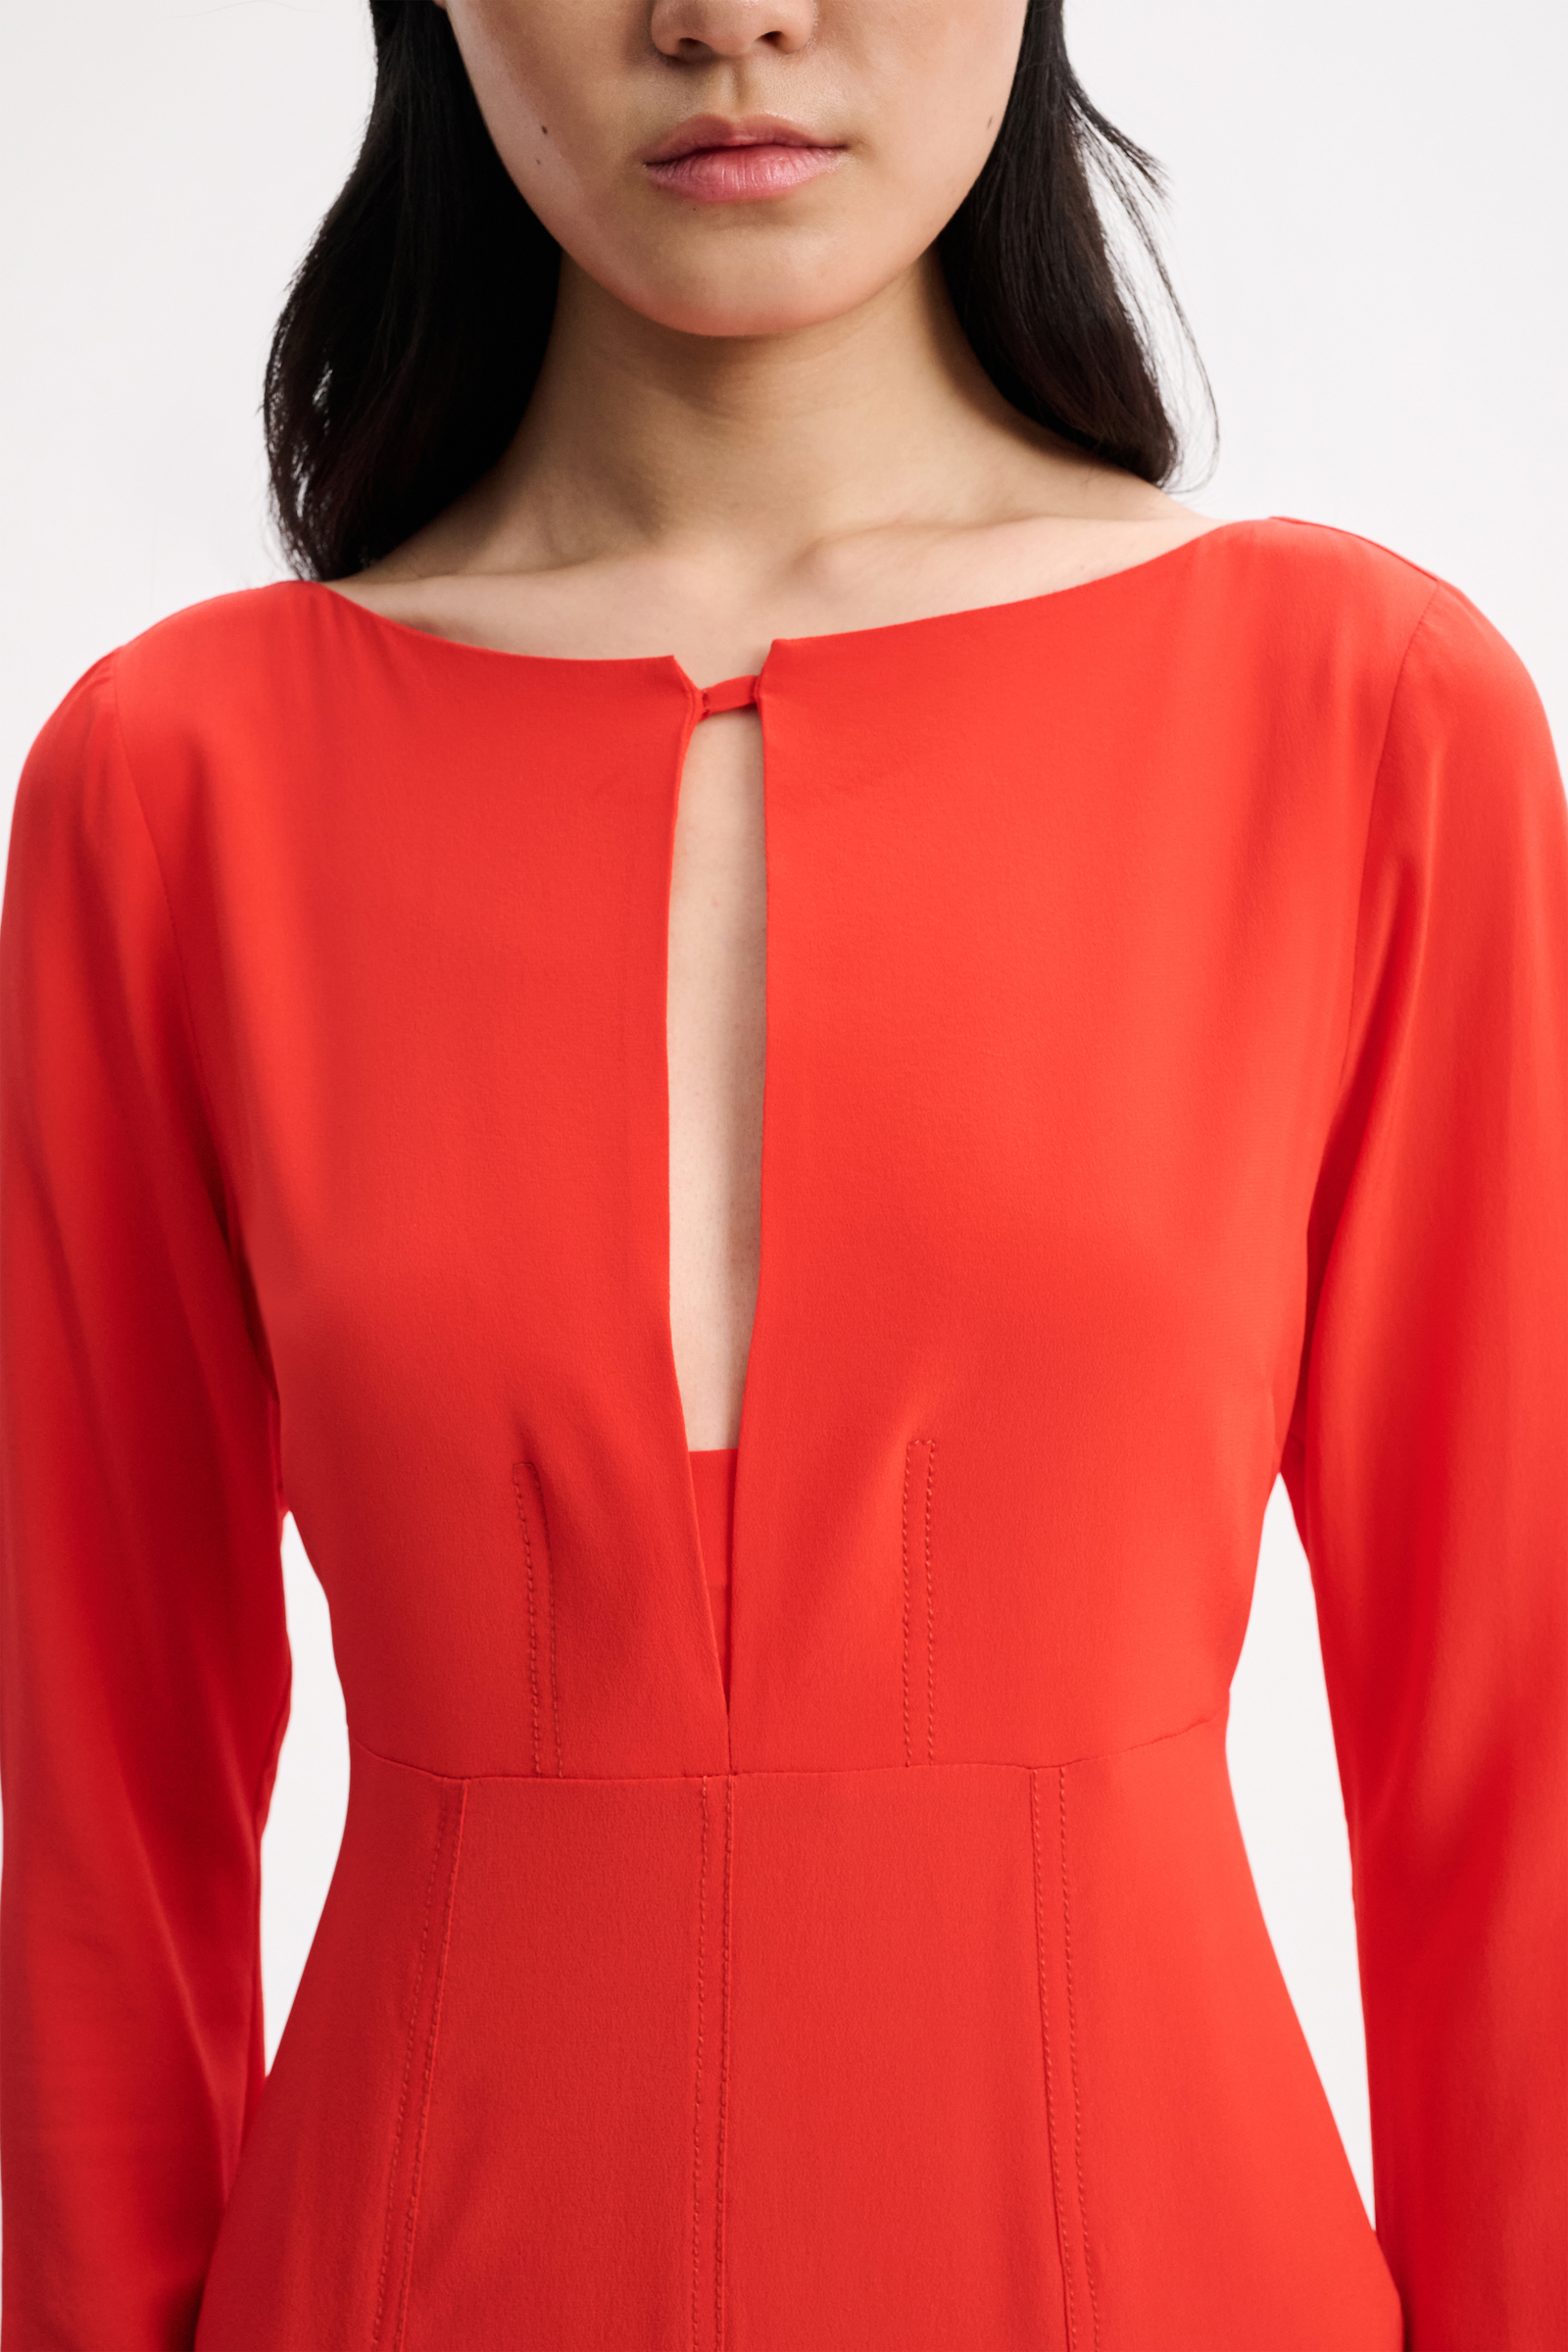 Dorothee Schumacher Silk dress with slit neckline shiny red